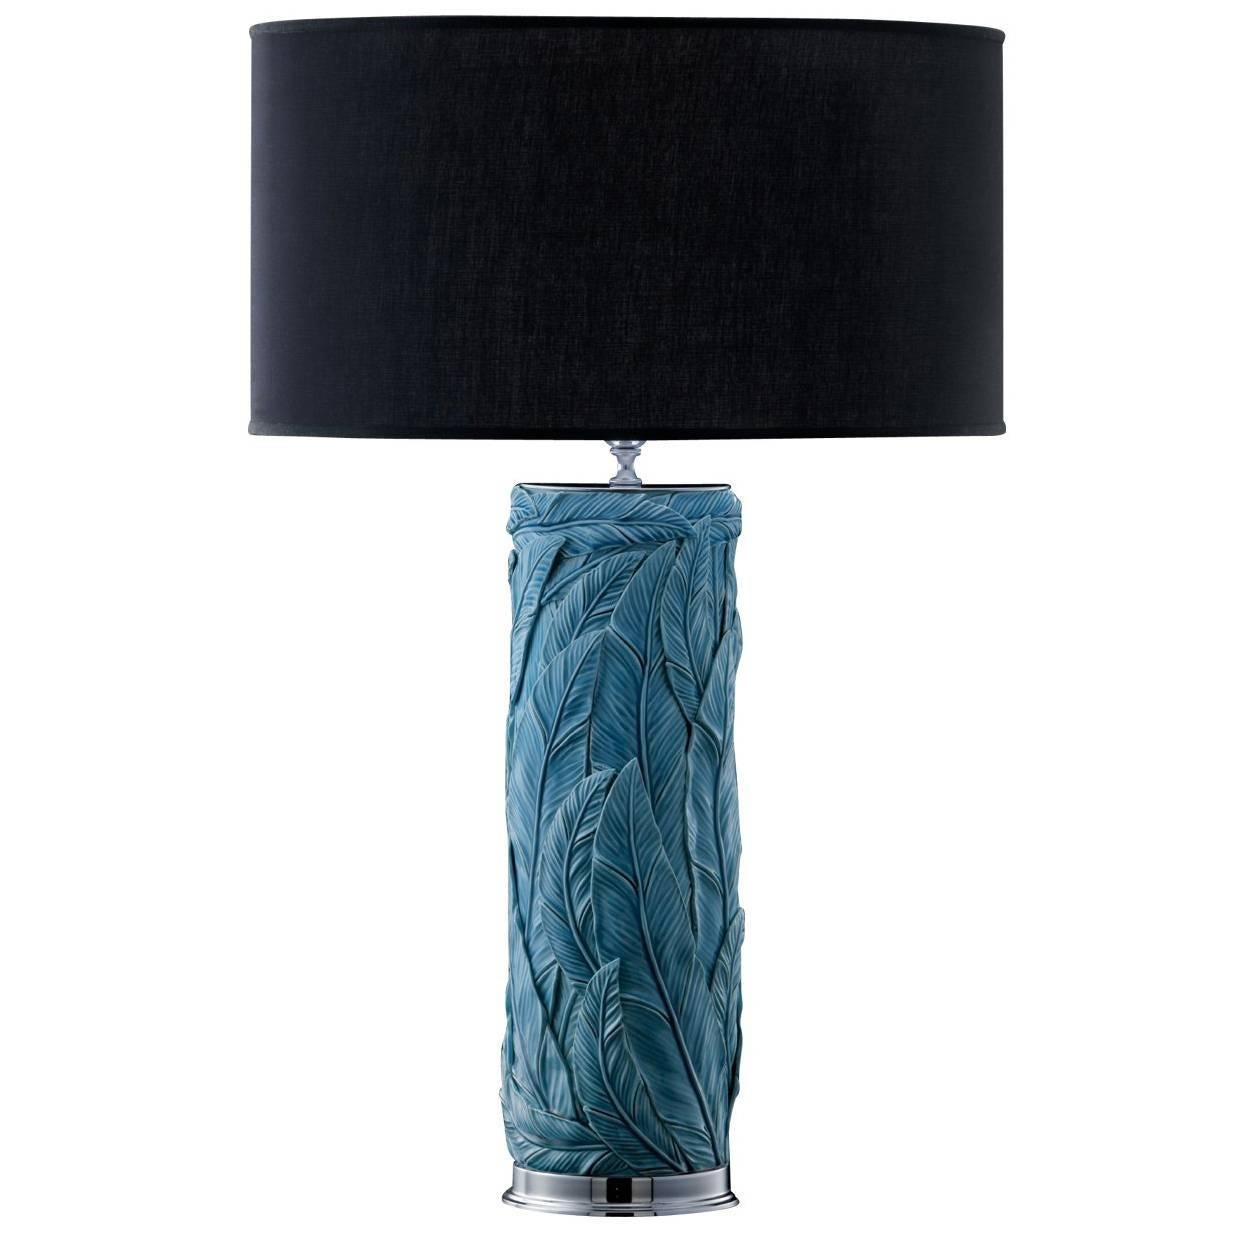 Jungla Turquoise Desk Lamp